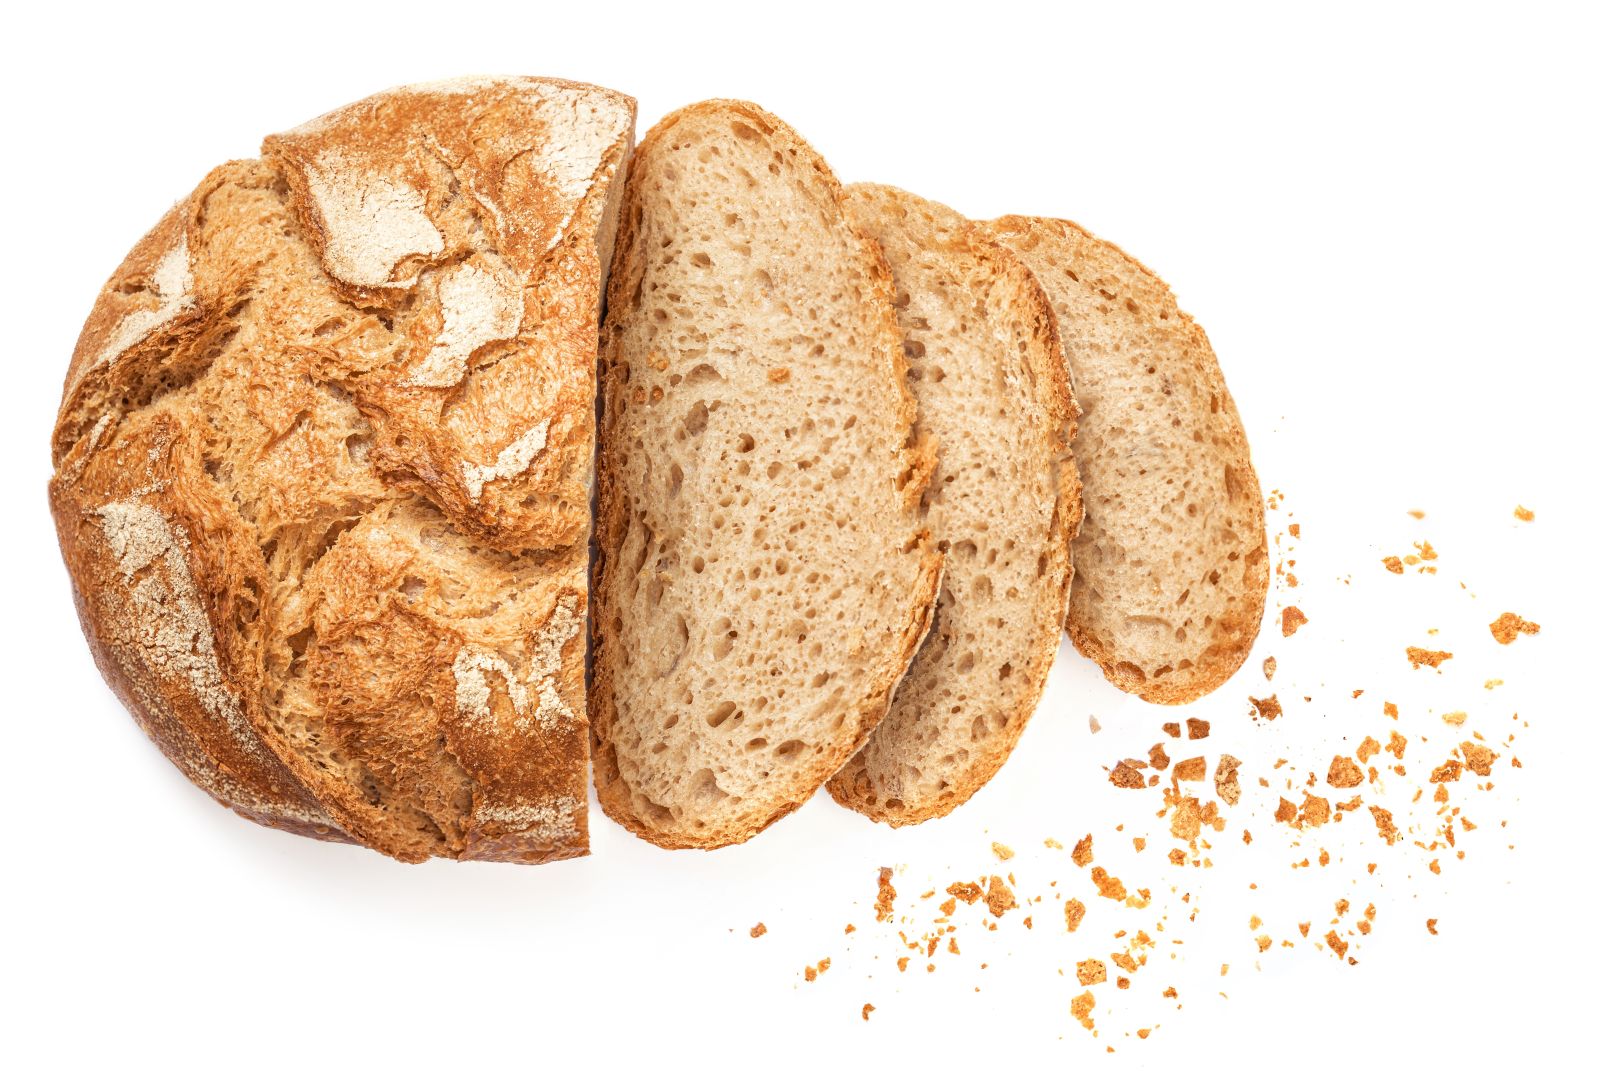 Baked wheat bread sliced via Shutterstock